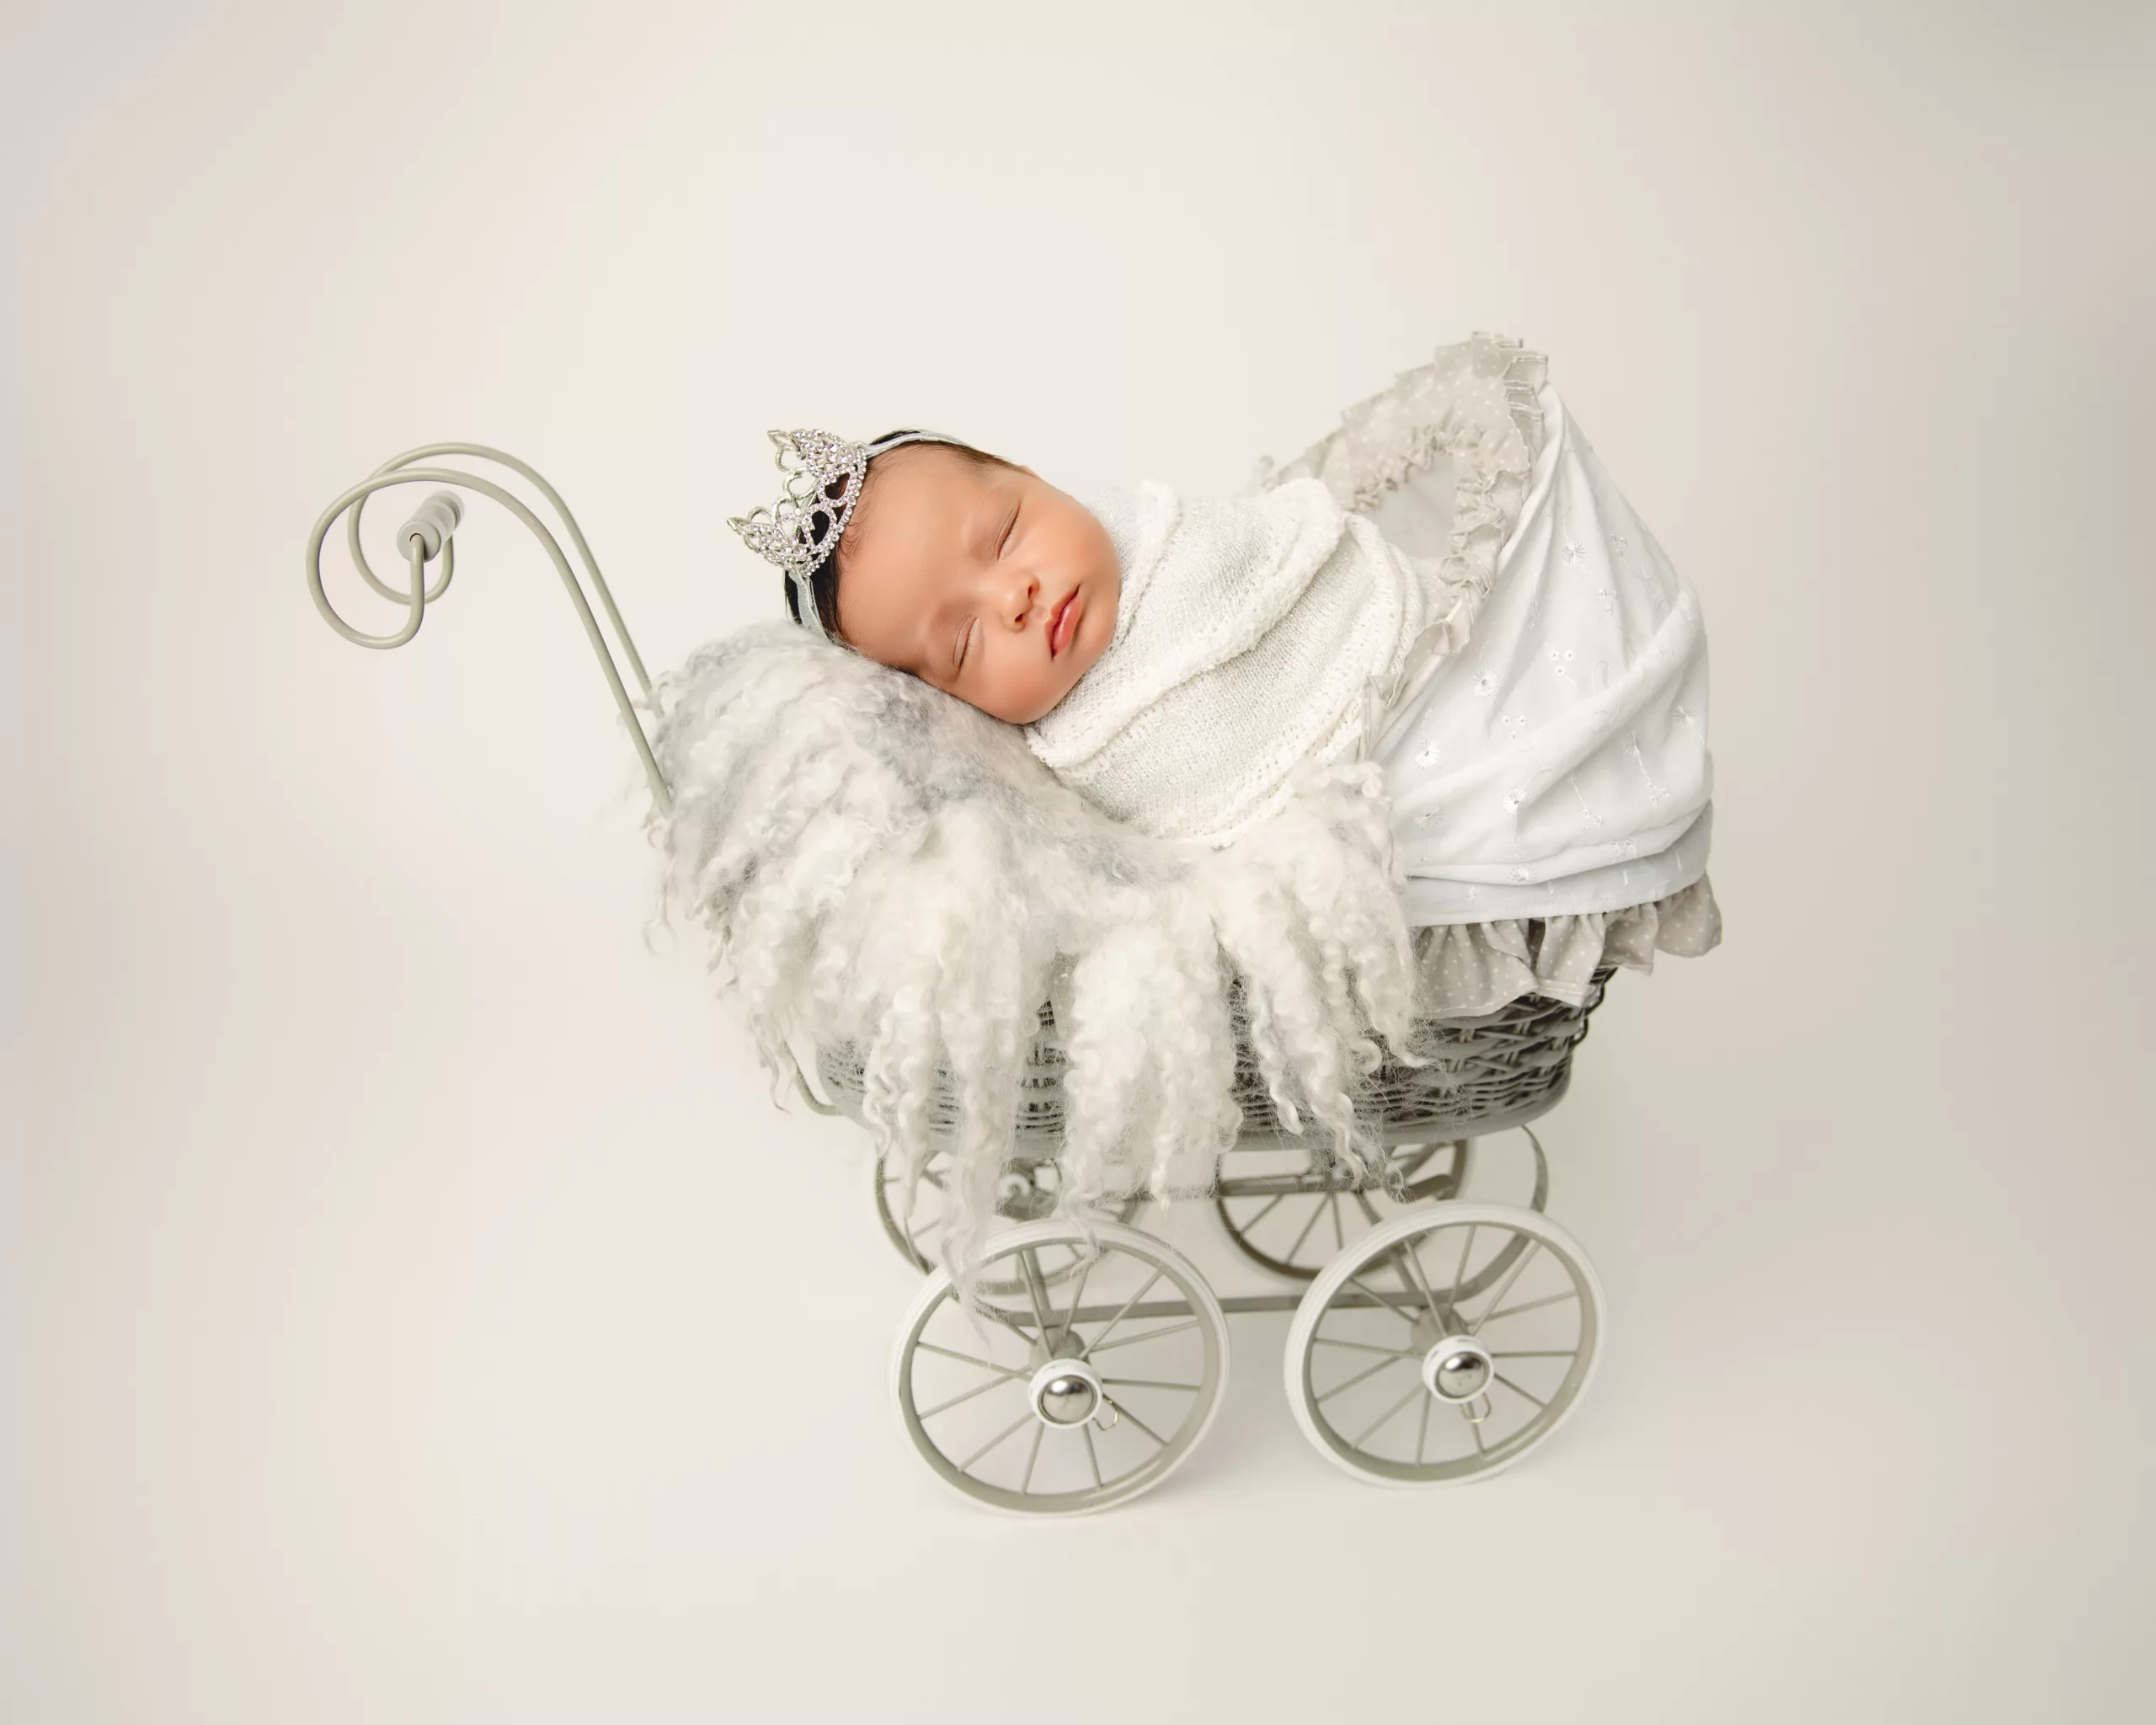 Orlando Newborn Photographer Baby Girl Photo studio stroller carriage princess grey white princess tiara crown